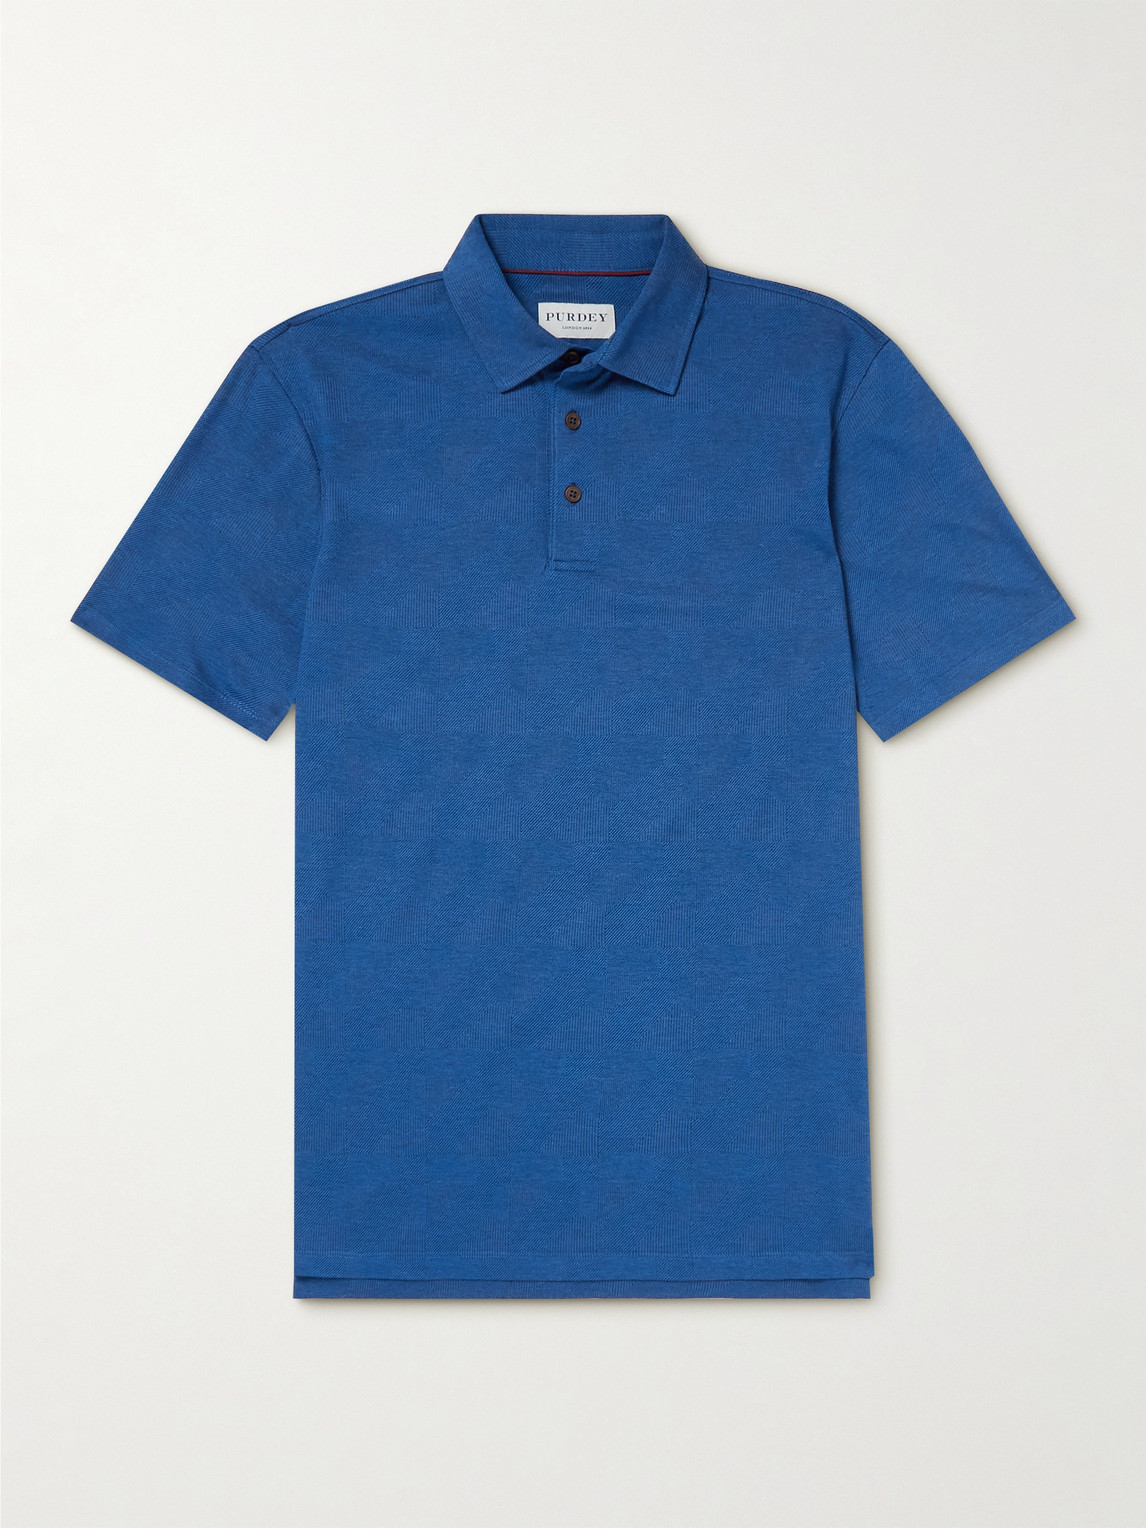 Purdey Cotton-piqué Jacquard Polo Shirt In Blue